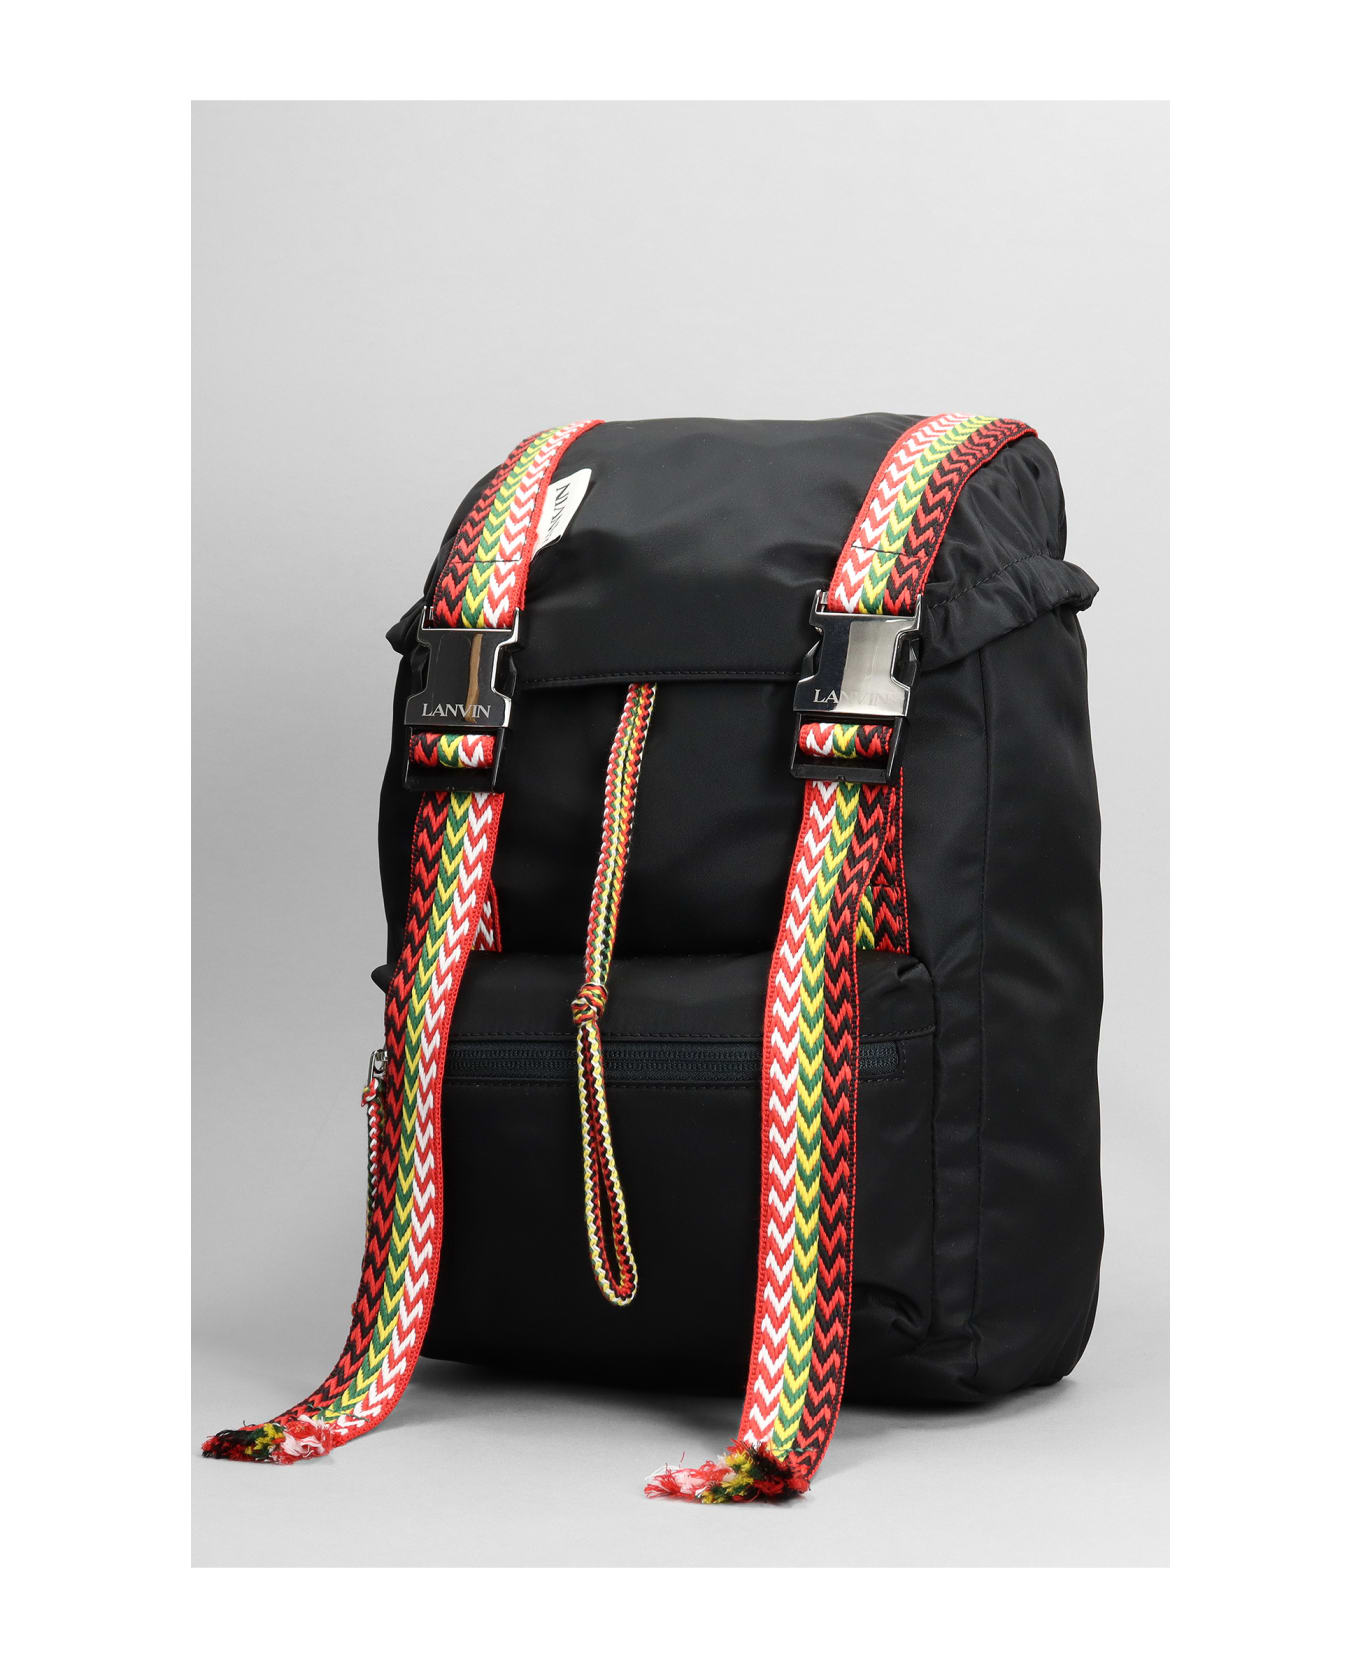 Lanvin Backpack Nano Curb Backpack In Black Nylon - black バックパック